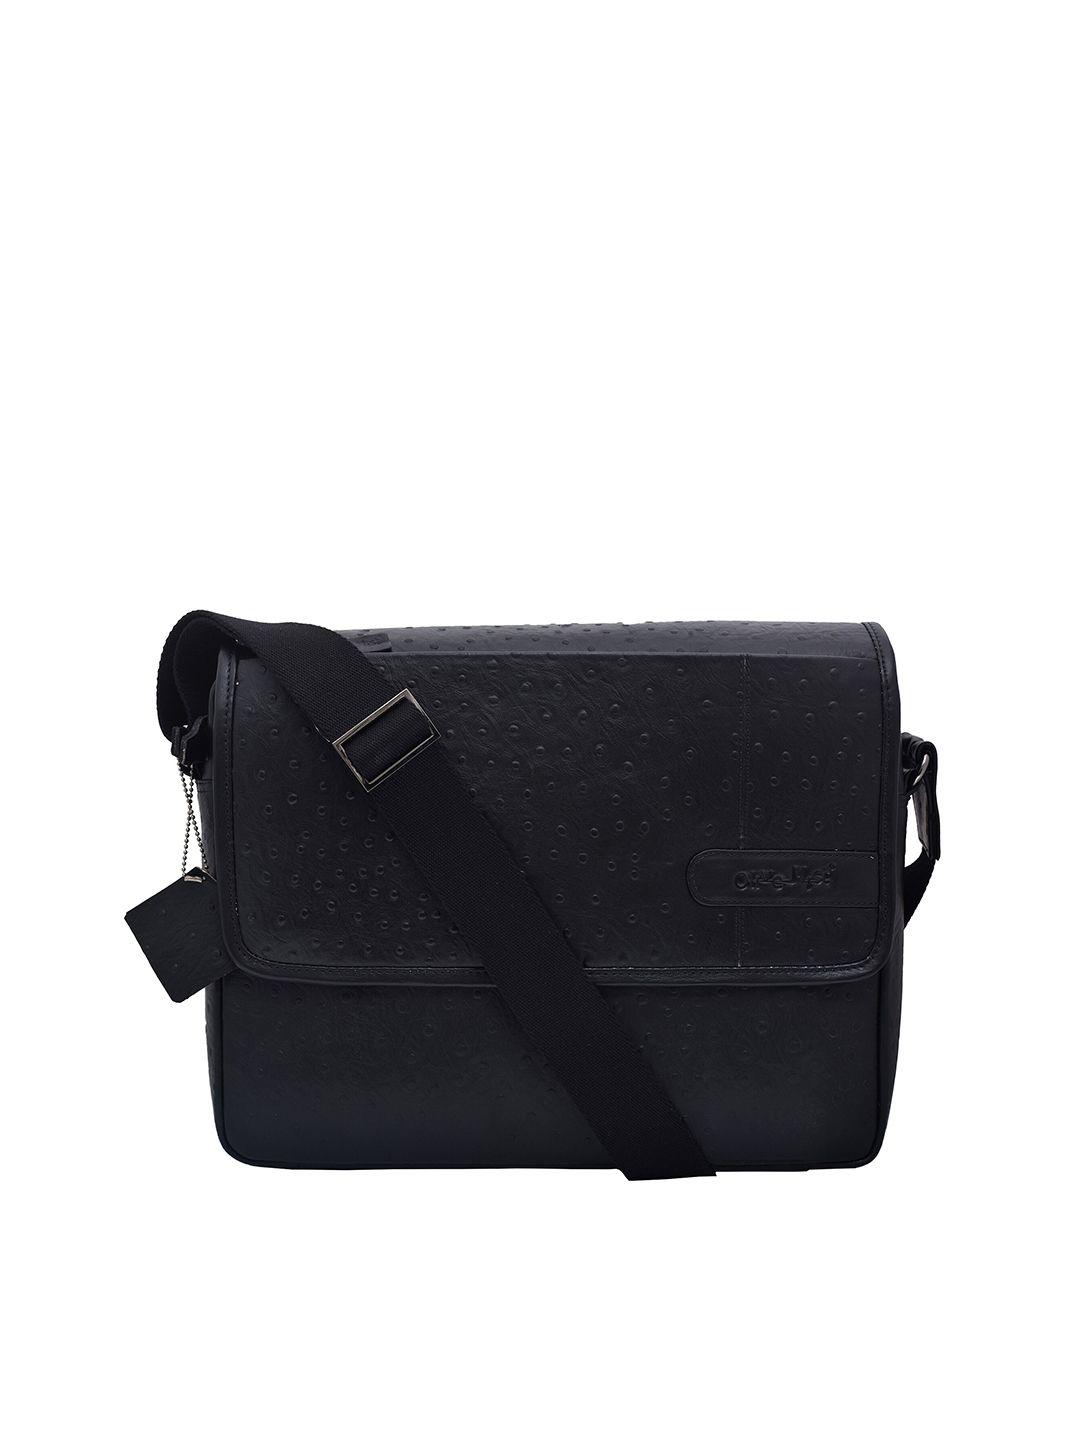 olive mist unisex black textured leather laptop bag